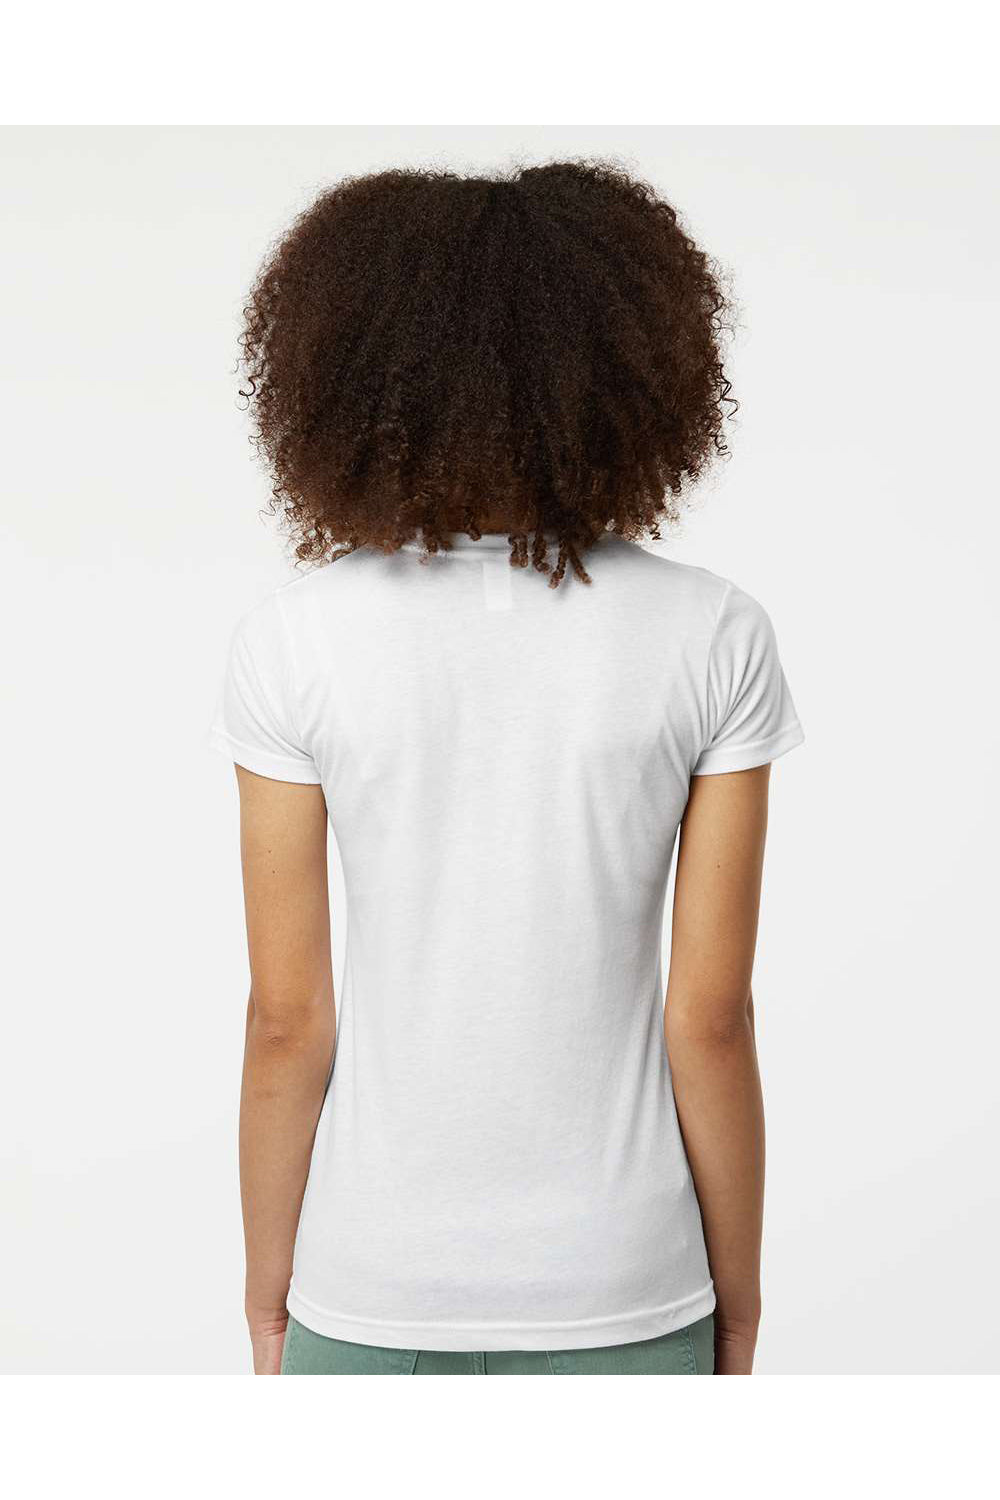 Tultex 240 Womens Poly-Rich Short Sleeve Crewneck T-Shirt White Model Back